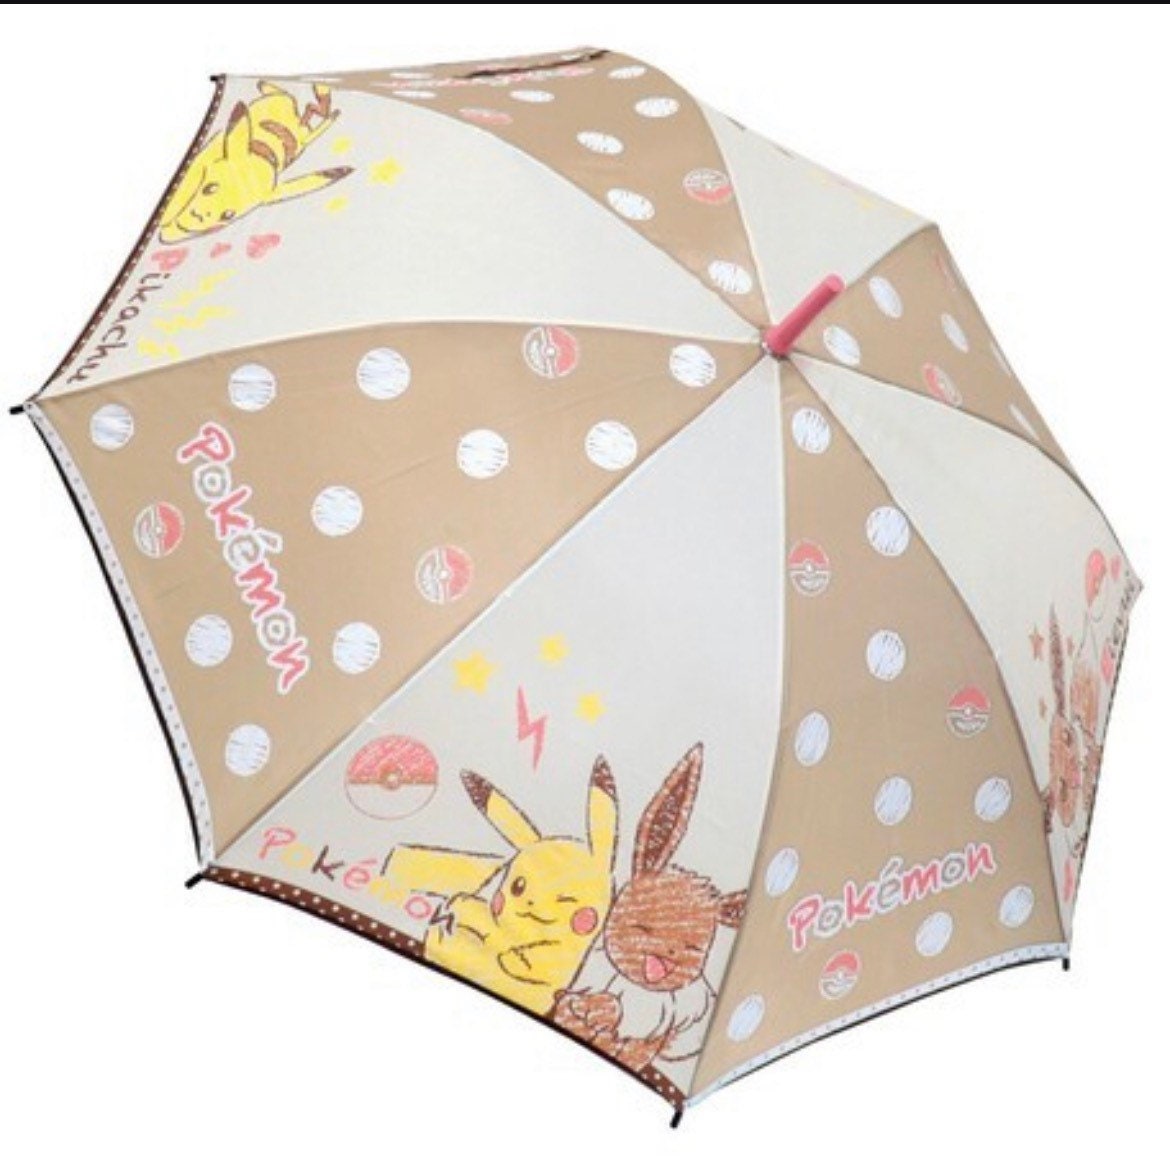 Pokemon crayon Umbrella Japan Import - Etsy New Zealand